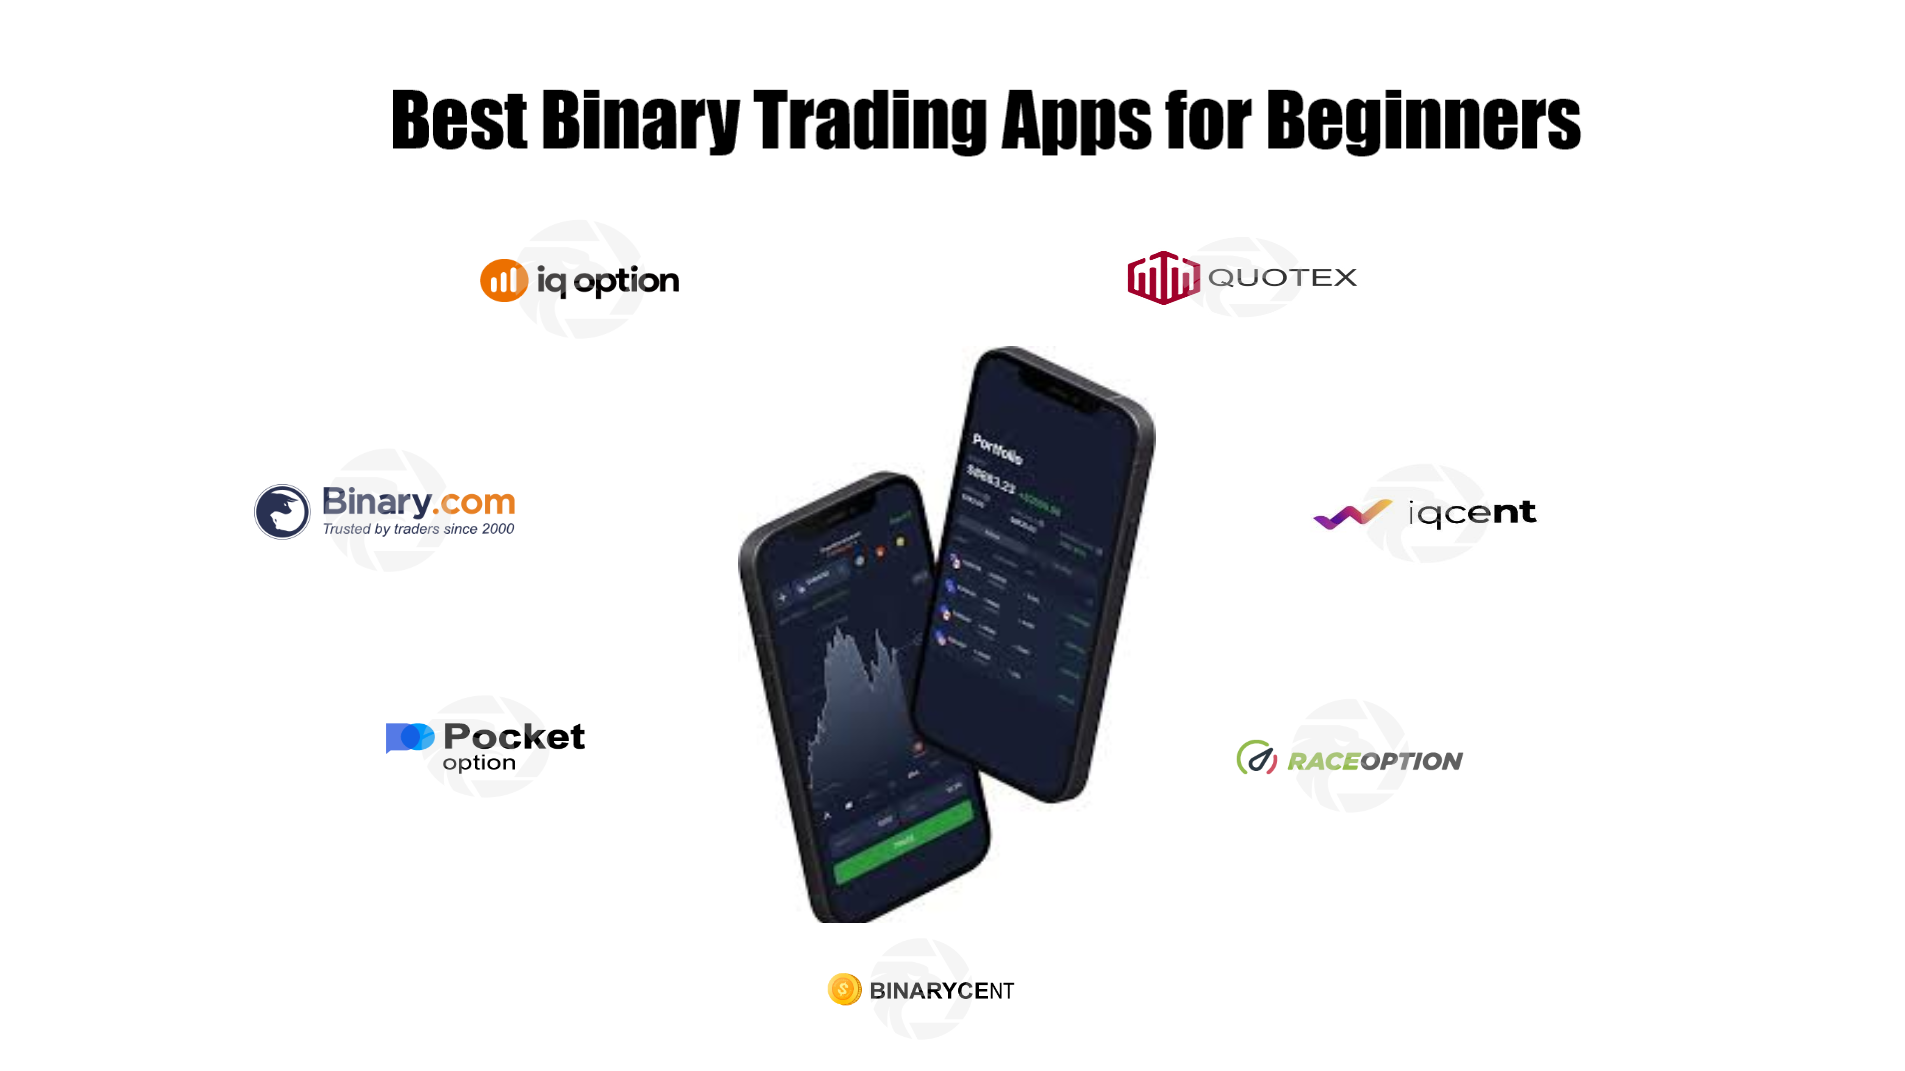 mejor aplicación de trading binario